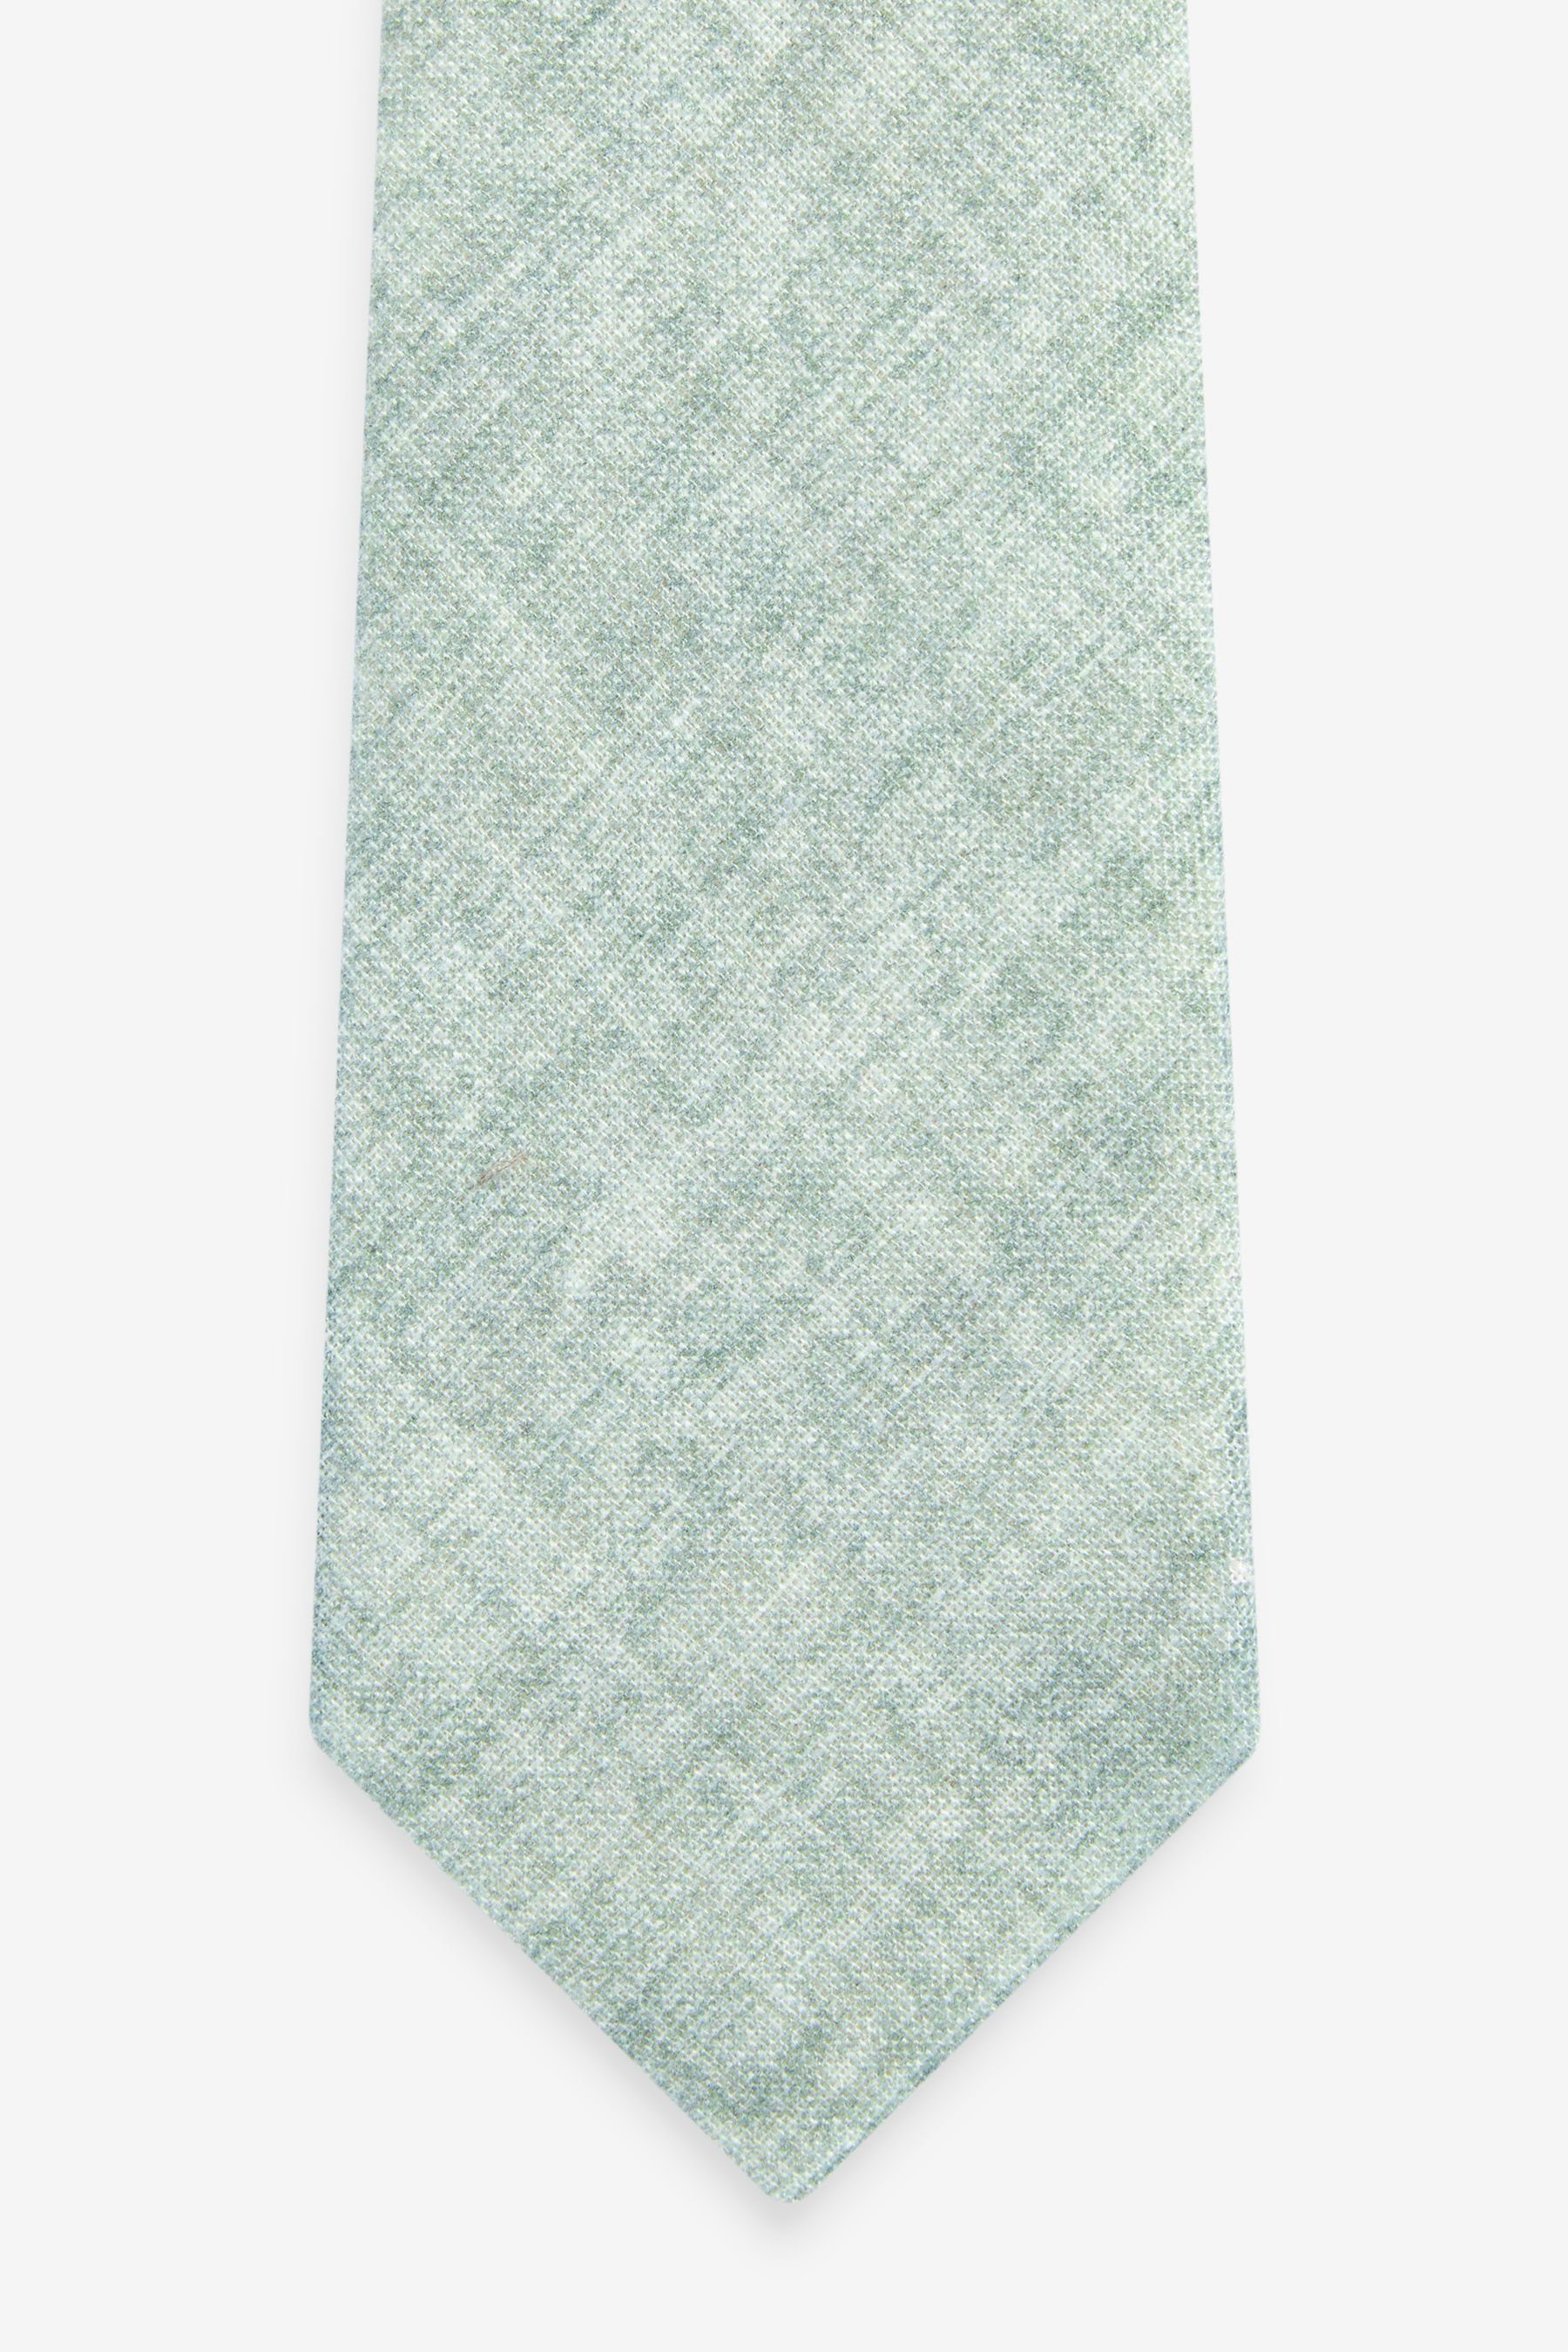 Next Sage Signature Krawatte Made (1-St) Italy in Green Leinen-Krawatte